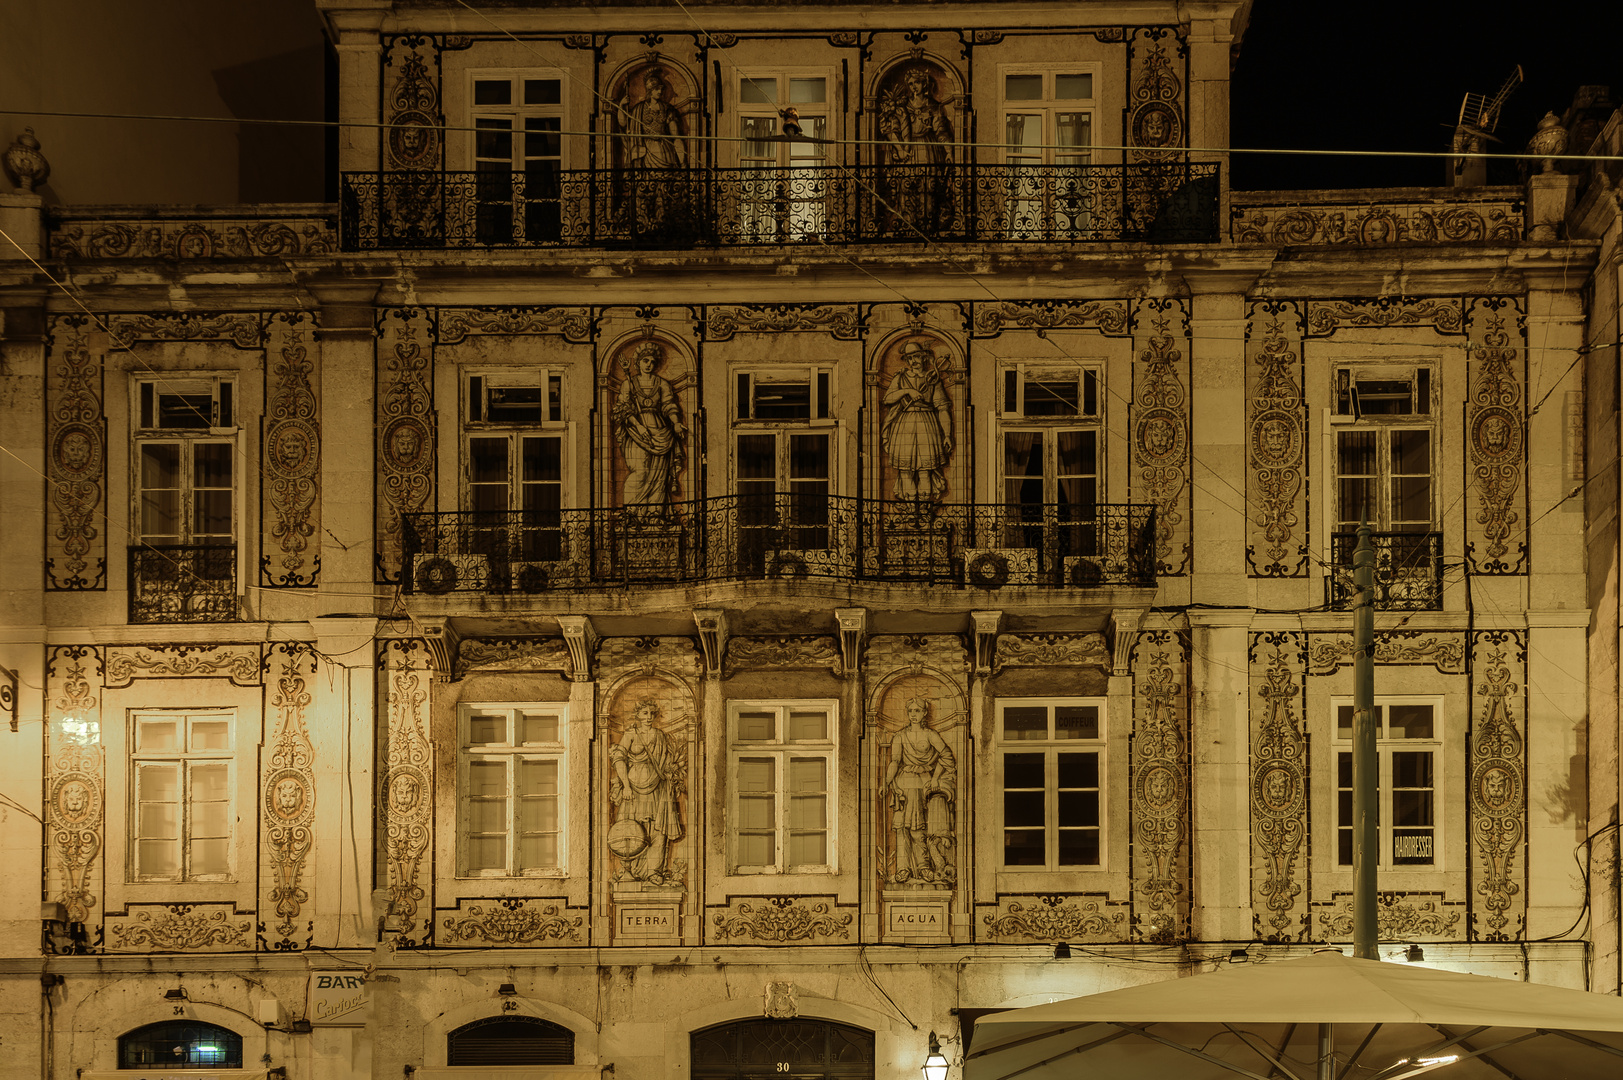 Lisboa by night - Alte Fassade